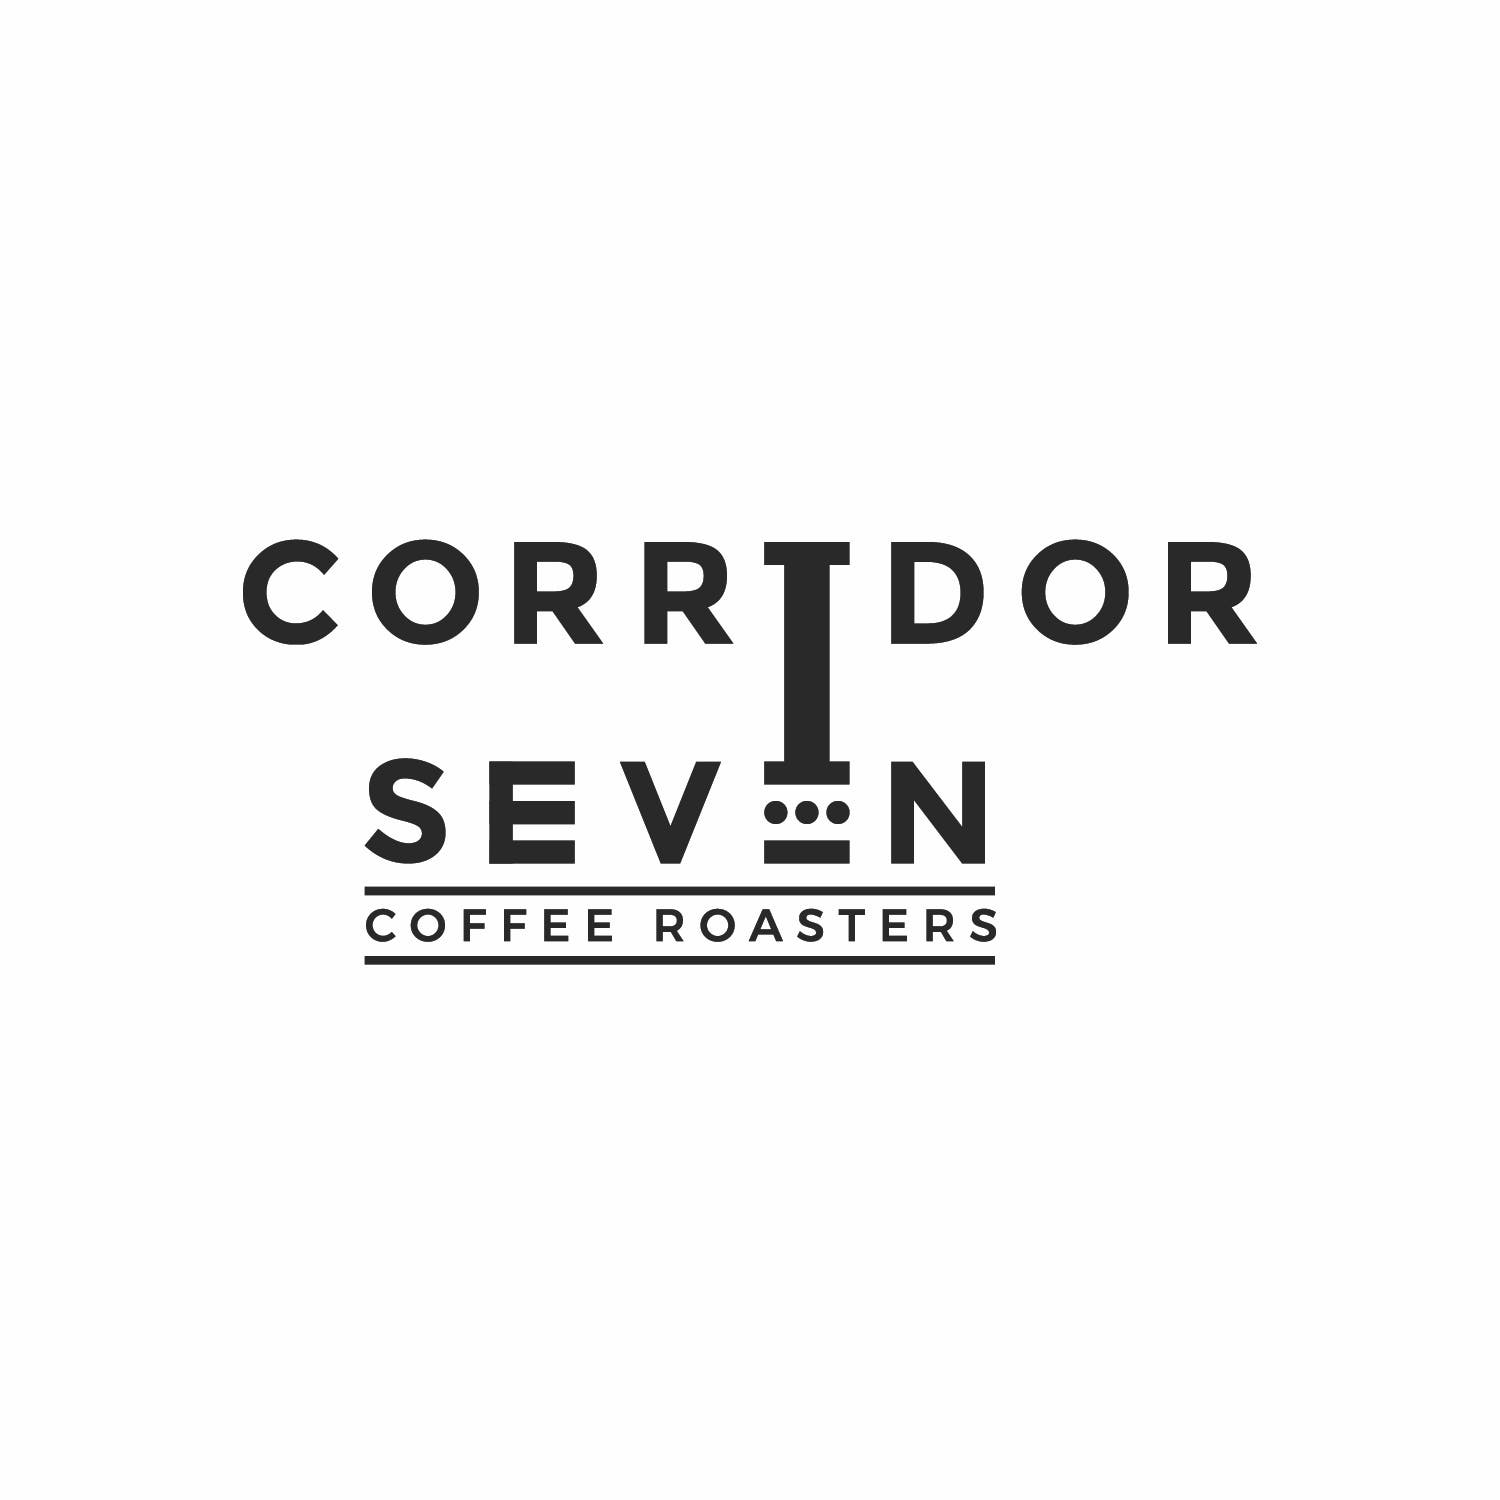 download seven corridor